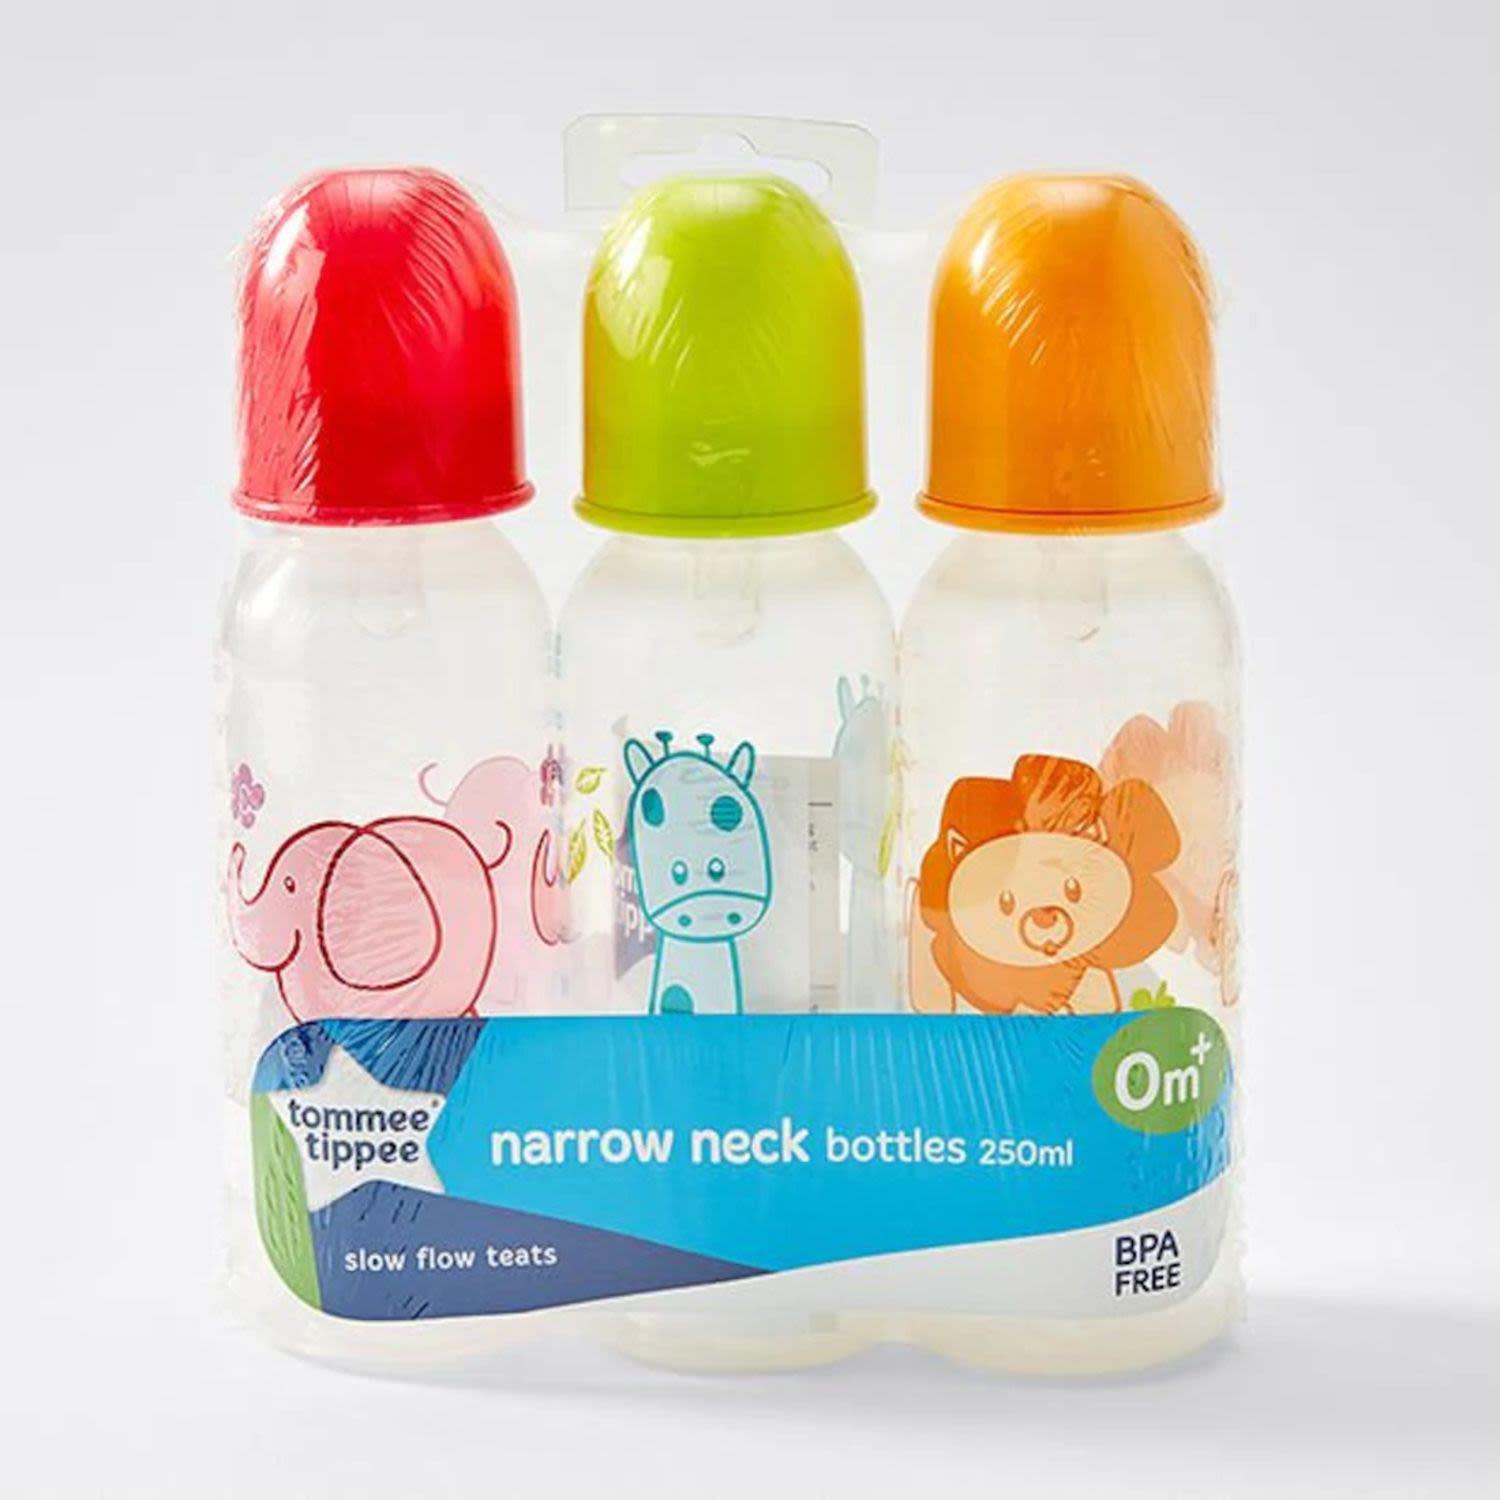 Baby U Narrow Neck Bottles (3 Pack) 250mL